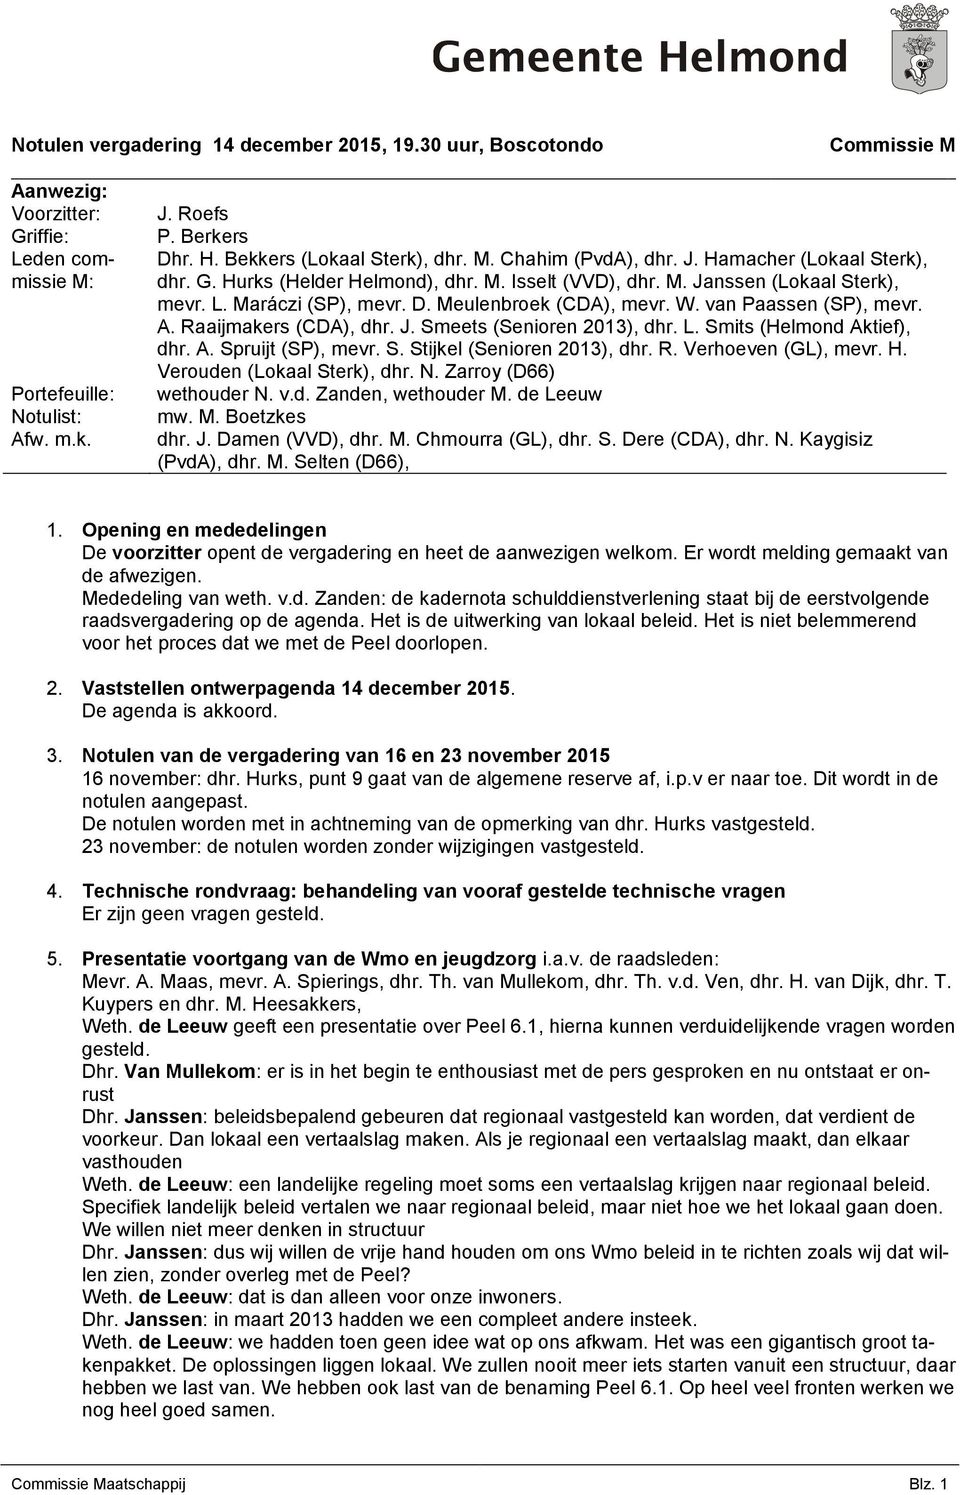 Meulenbroek (CDA), mevr. W. van Paassen (SP), mevr. A. Raaijmakers (CDA), dhr. J. Smeets (Senioren 2013), dhr. L. Smits (Helmond Aktief), dhr. A. Spruijt (SP), mevr. S. Stijkel (Senioren 2013), dhr.